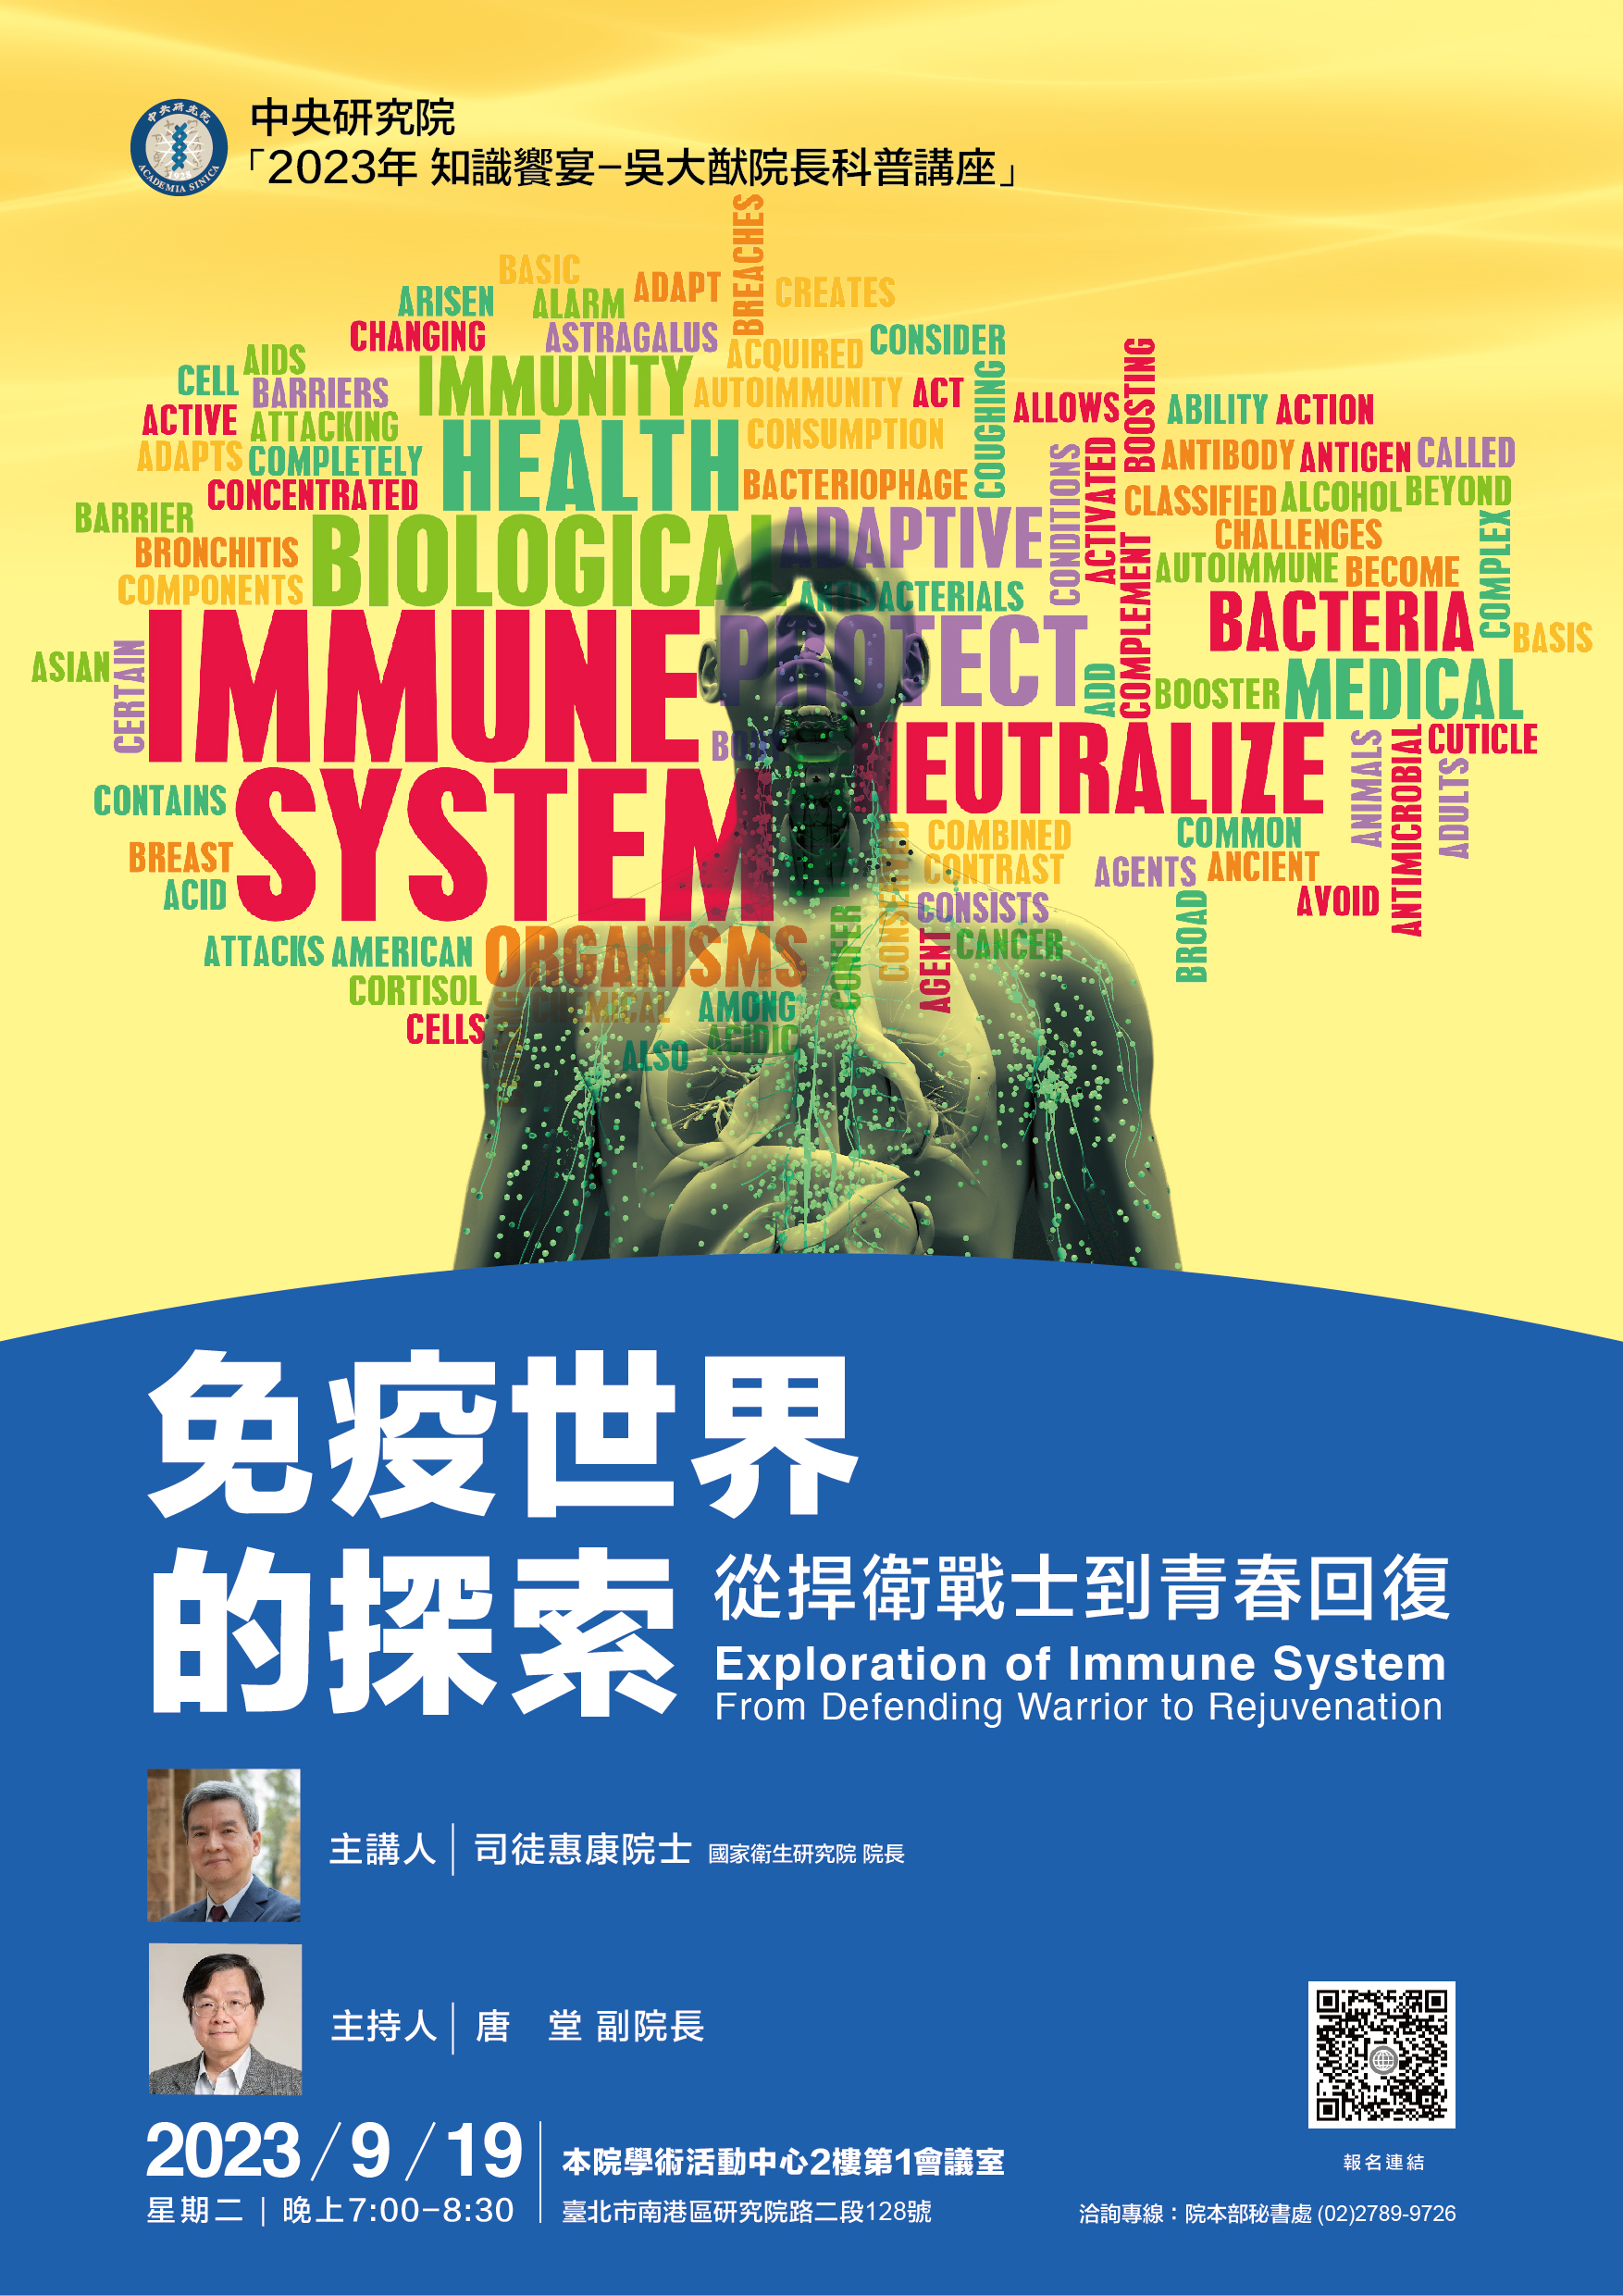 Exploration of Immune System: From Defending Warrior to Rejuvenation